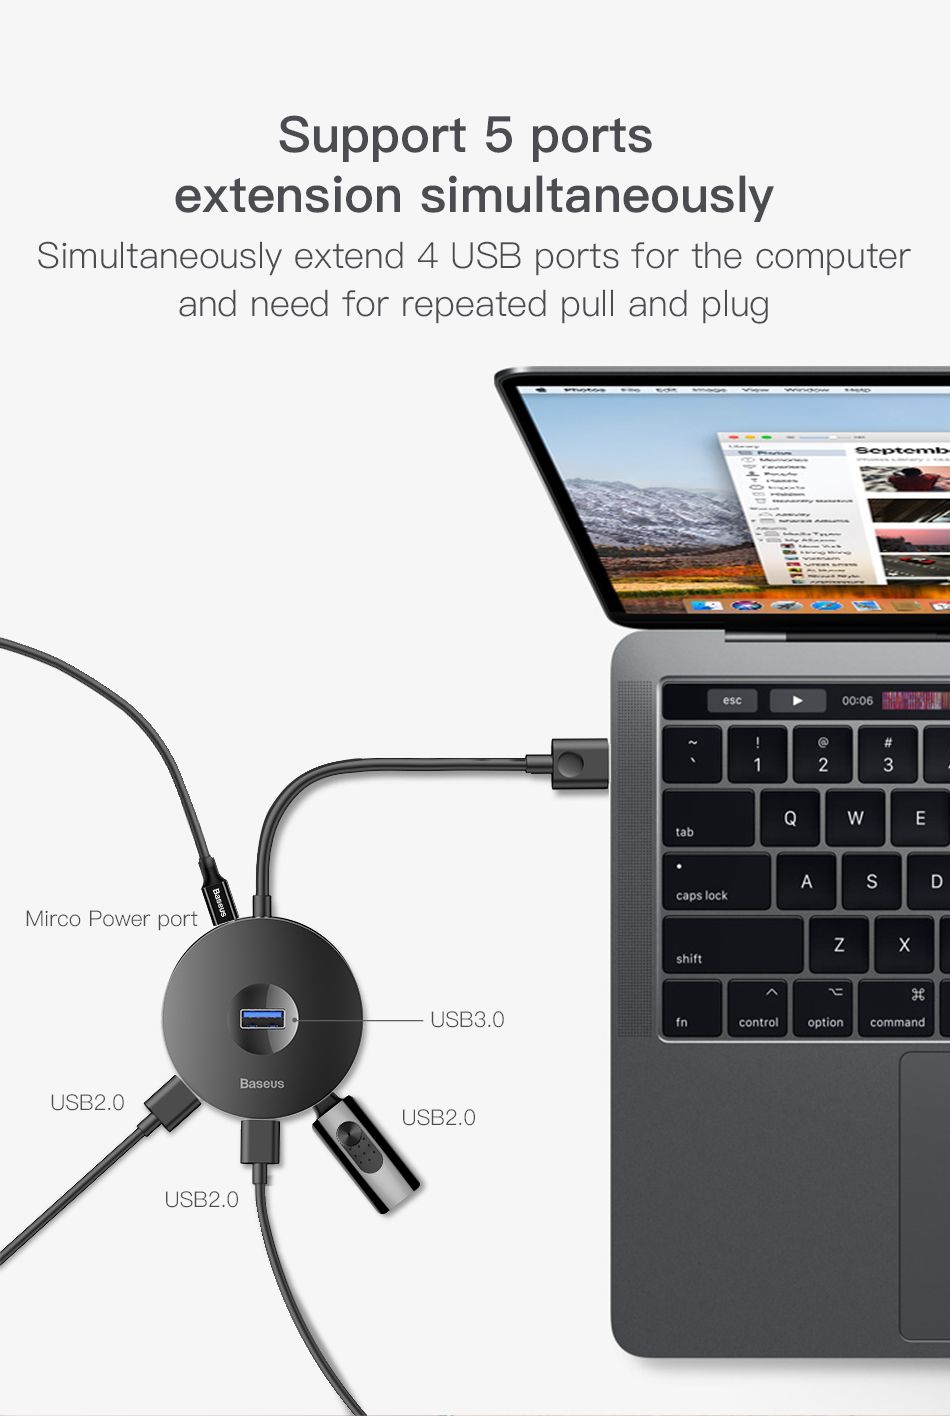 Baseus-Multi-USB-30-Type-C-to-USB30-3-USB20-Universal-HUB-Adapter-For-Macbook-Computer-Hard-Drive-1371619